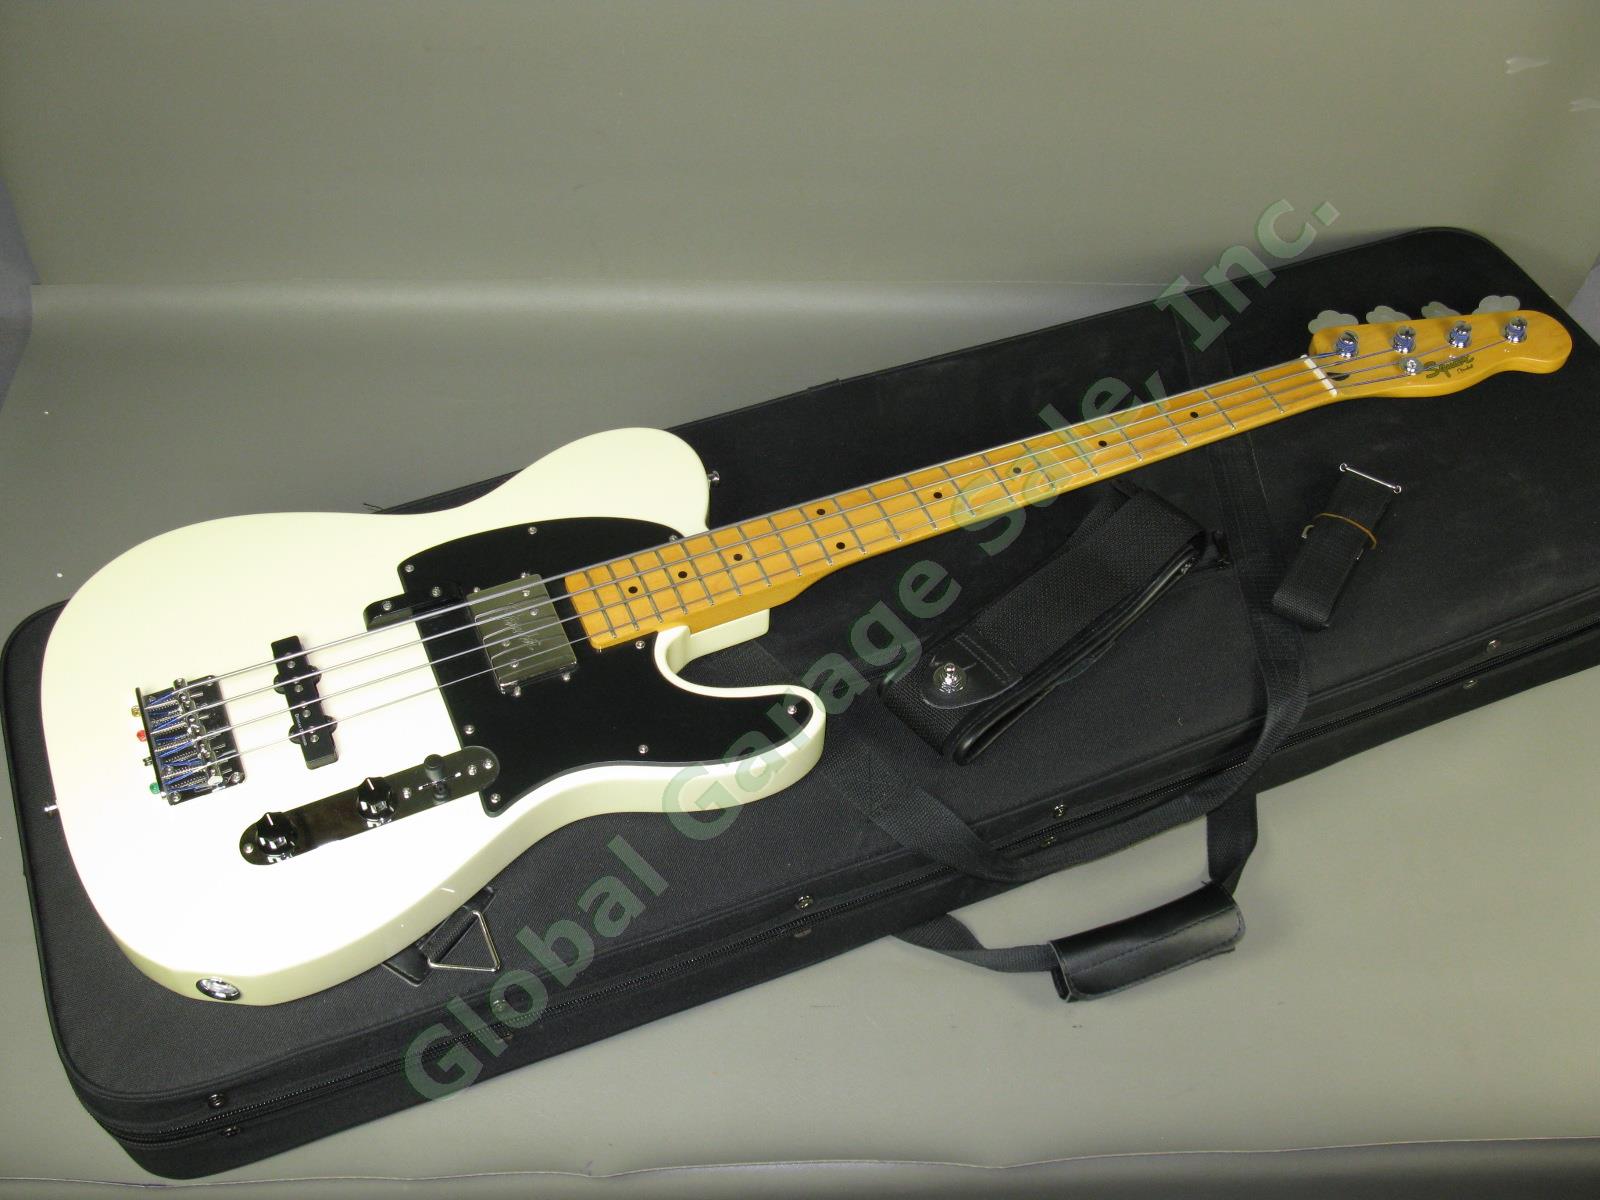 2012 Fender Squier Vtg Modified Telecaster Bass Special Guitar w/ Case Near Mint